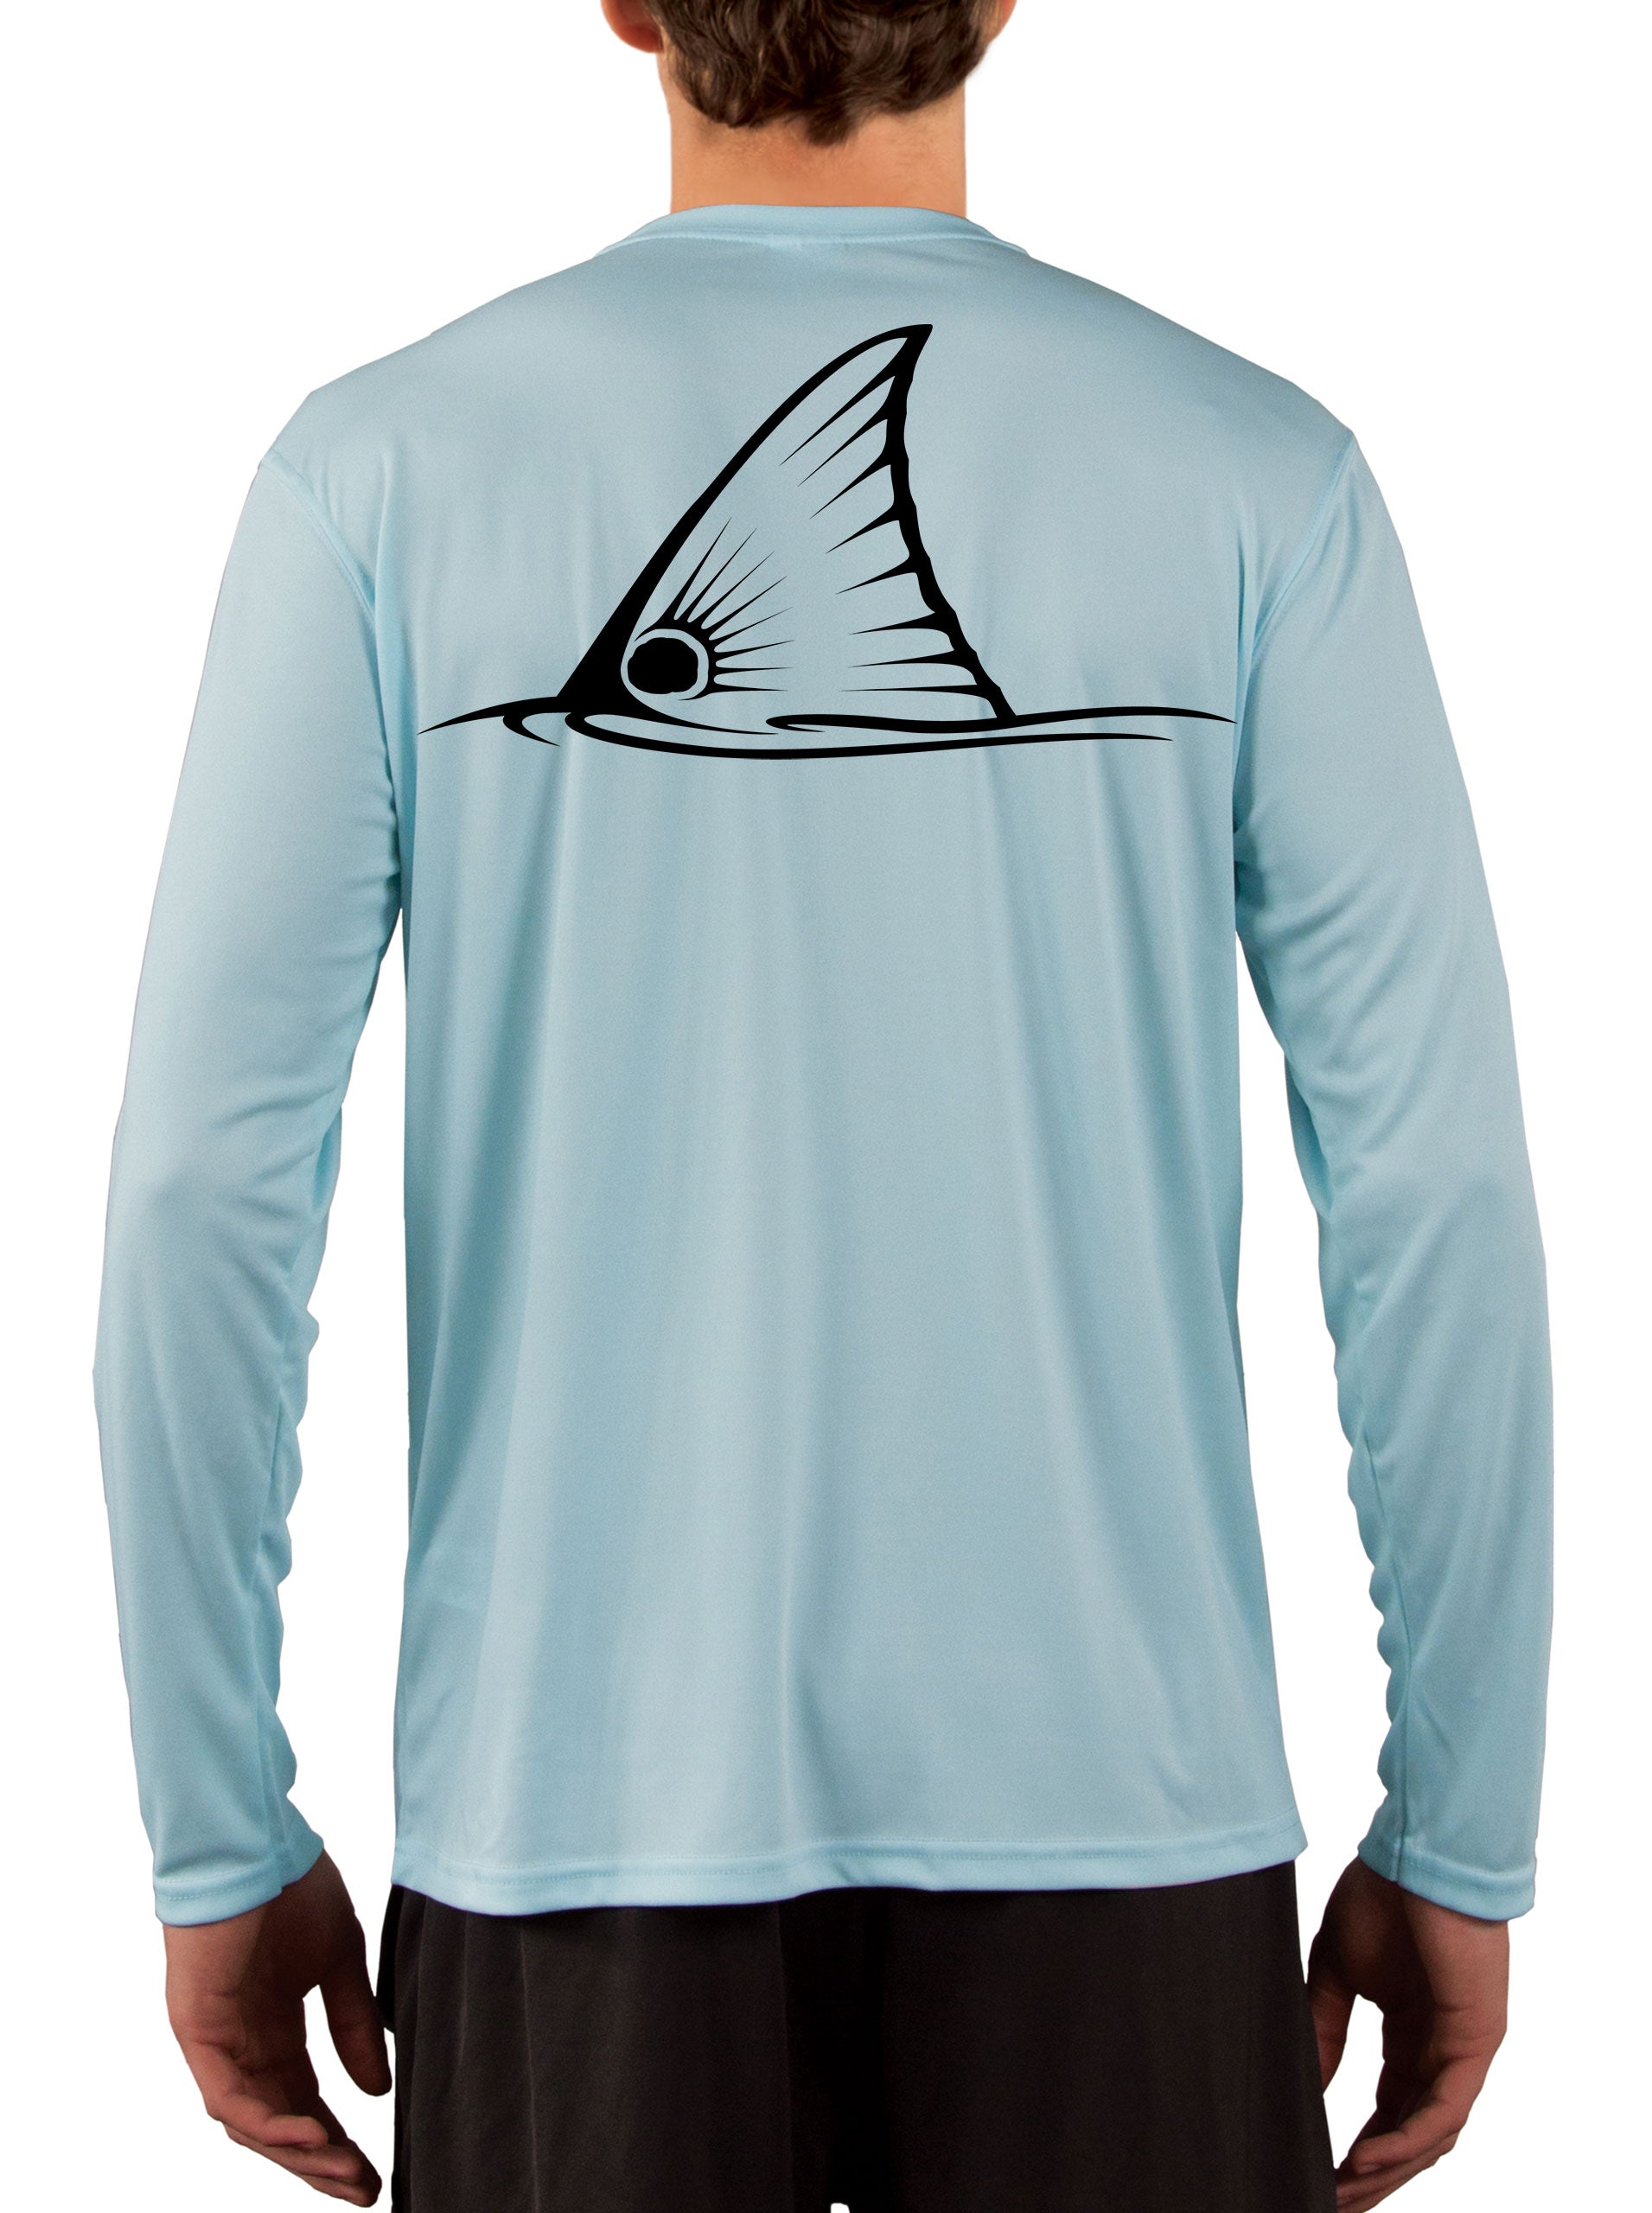 Tailing Redfish Fishing Shirts for Men Red Drum Apparel 3XL / Ice Blue